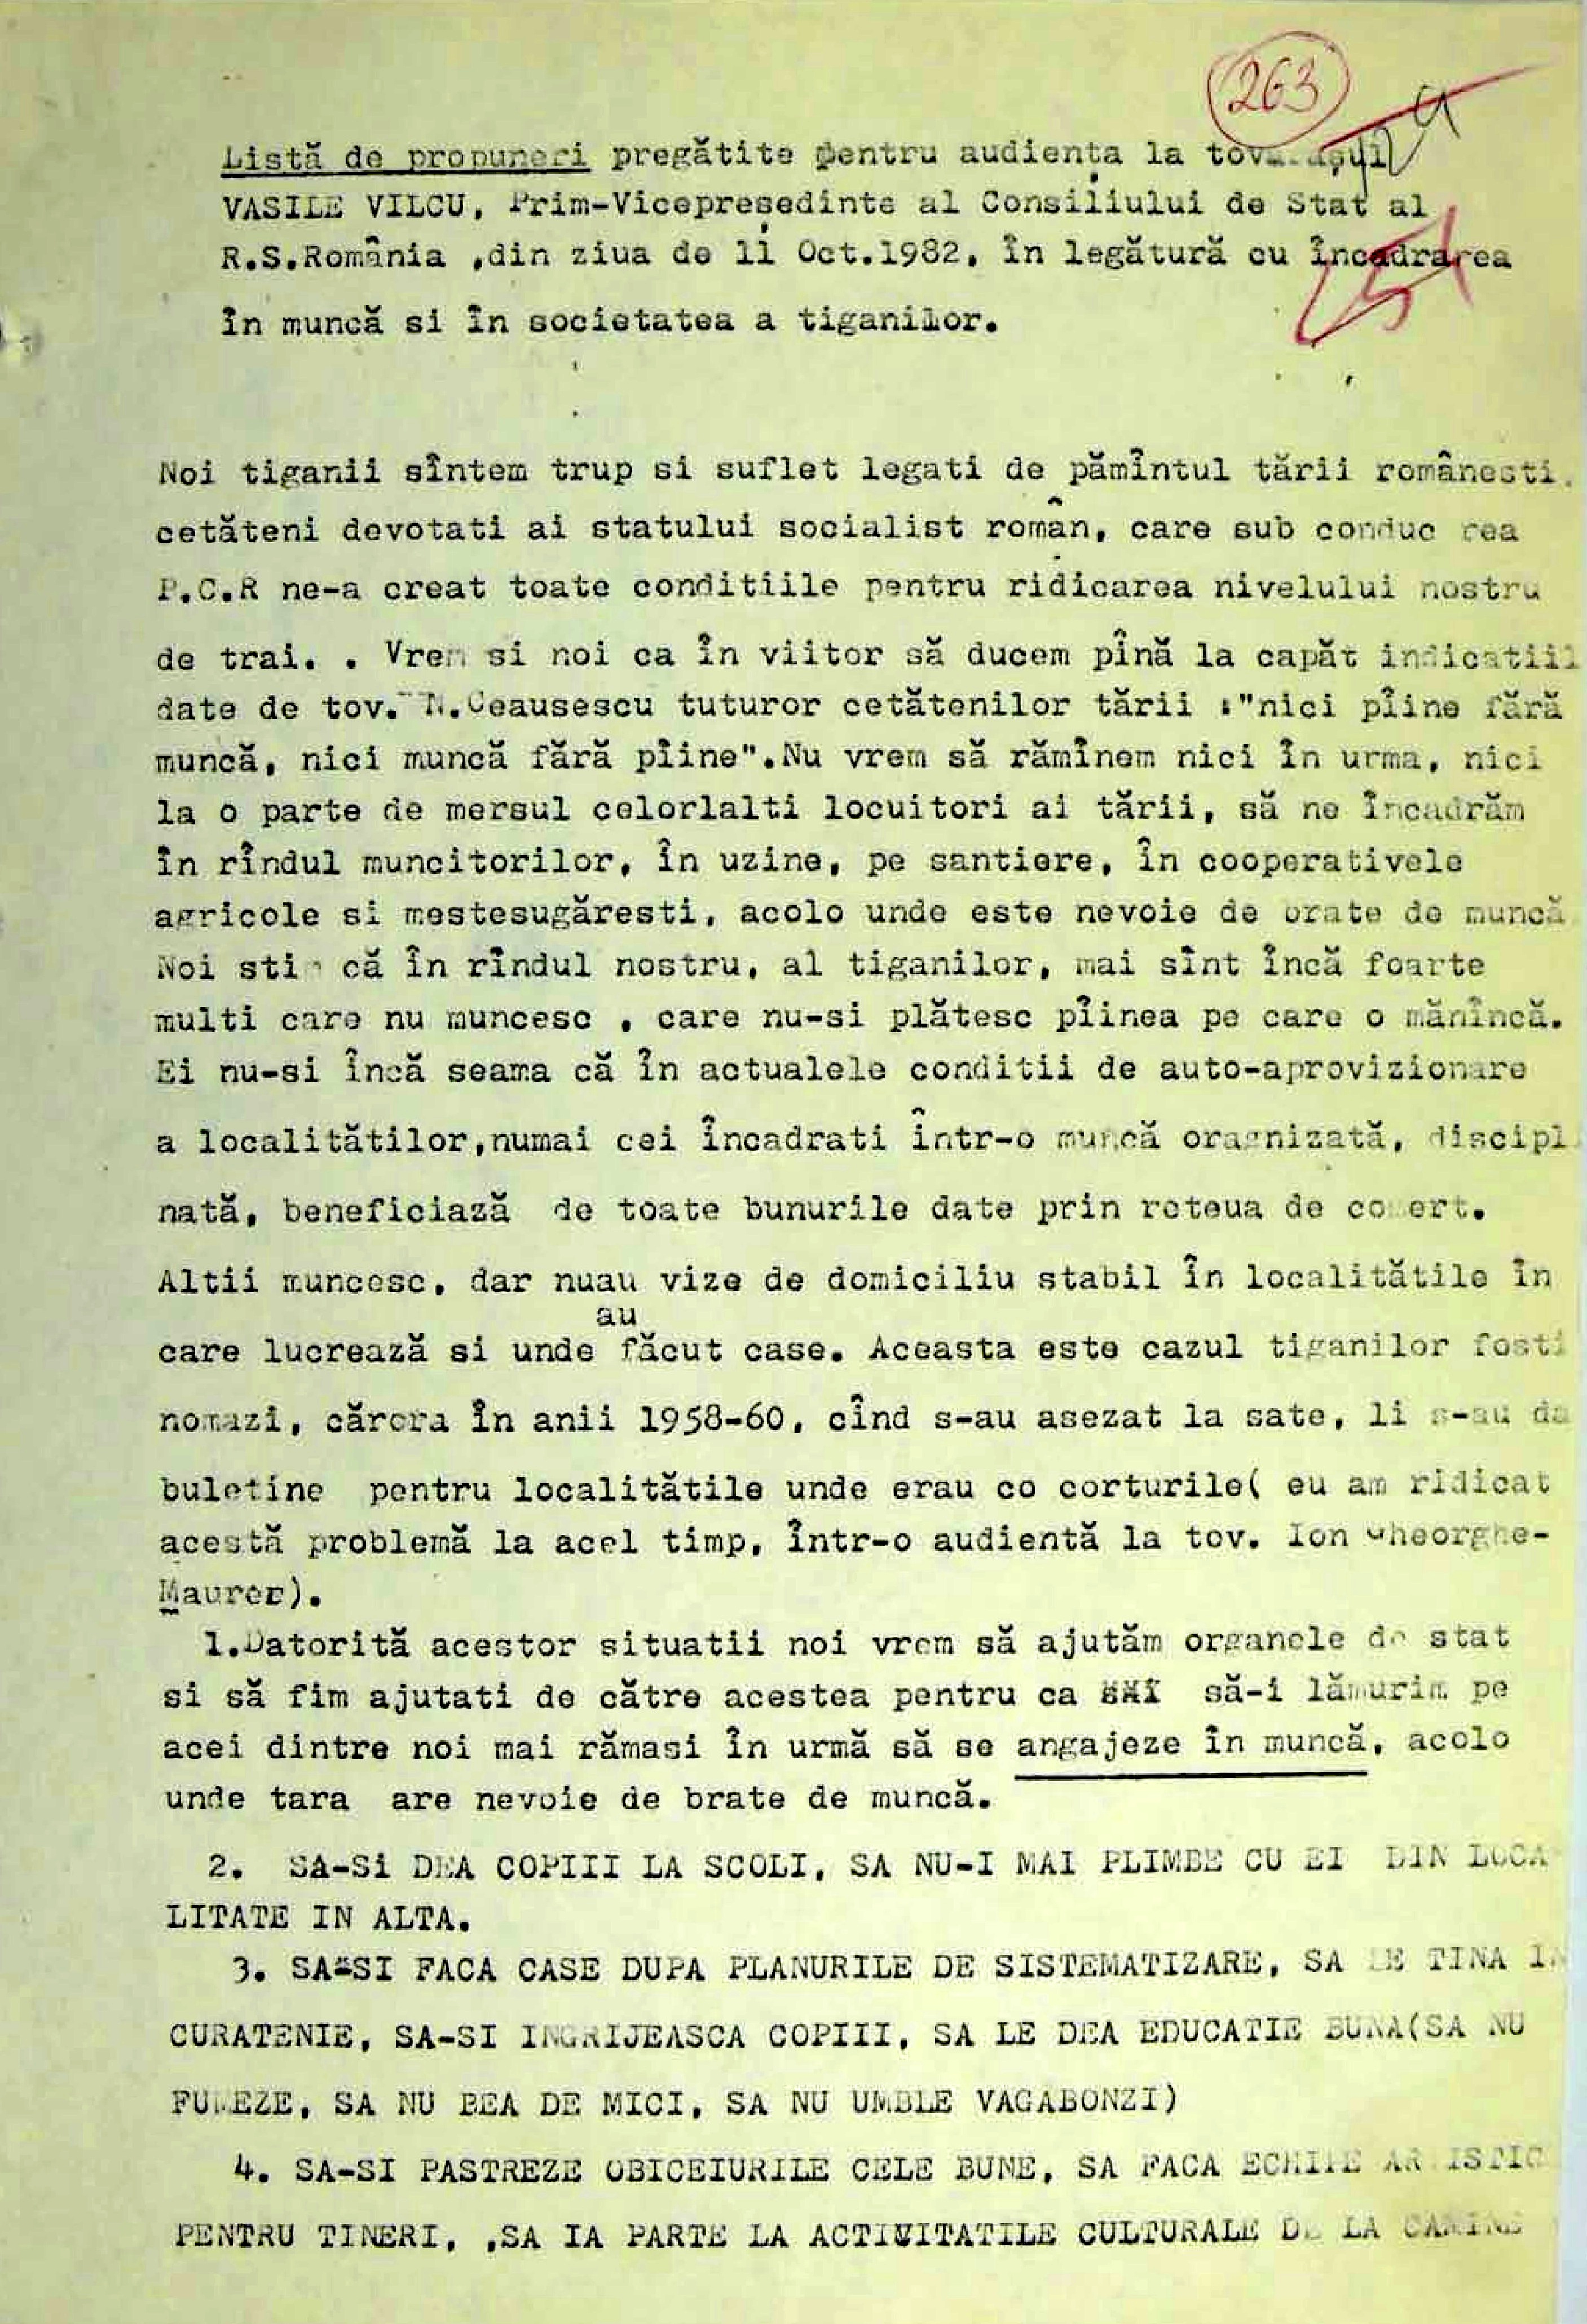 Memorandum of Ion Cioabă and Nicolae Gheorghe to Vasile Vâlcu, prime-vice-president of the State Council of the Socialist Republic of Romania, 11 October 1982, Bucharest